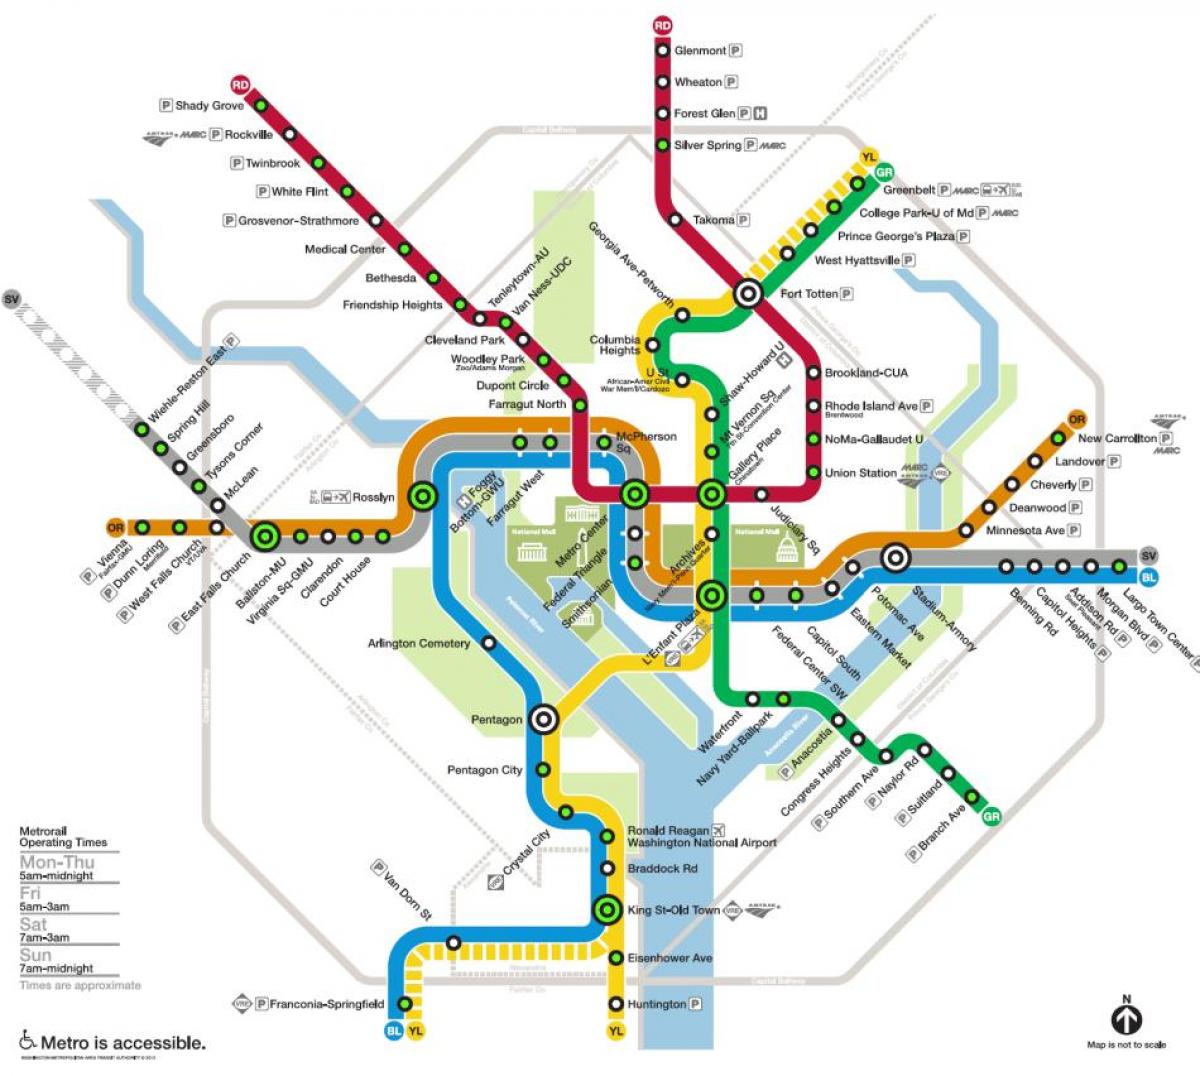 вашингтон метро станица на мапа